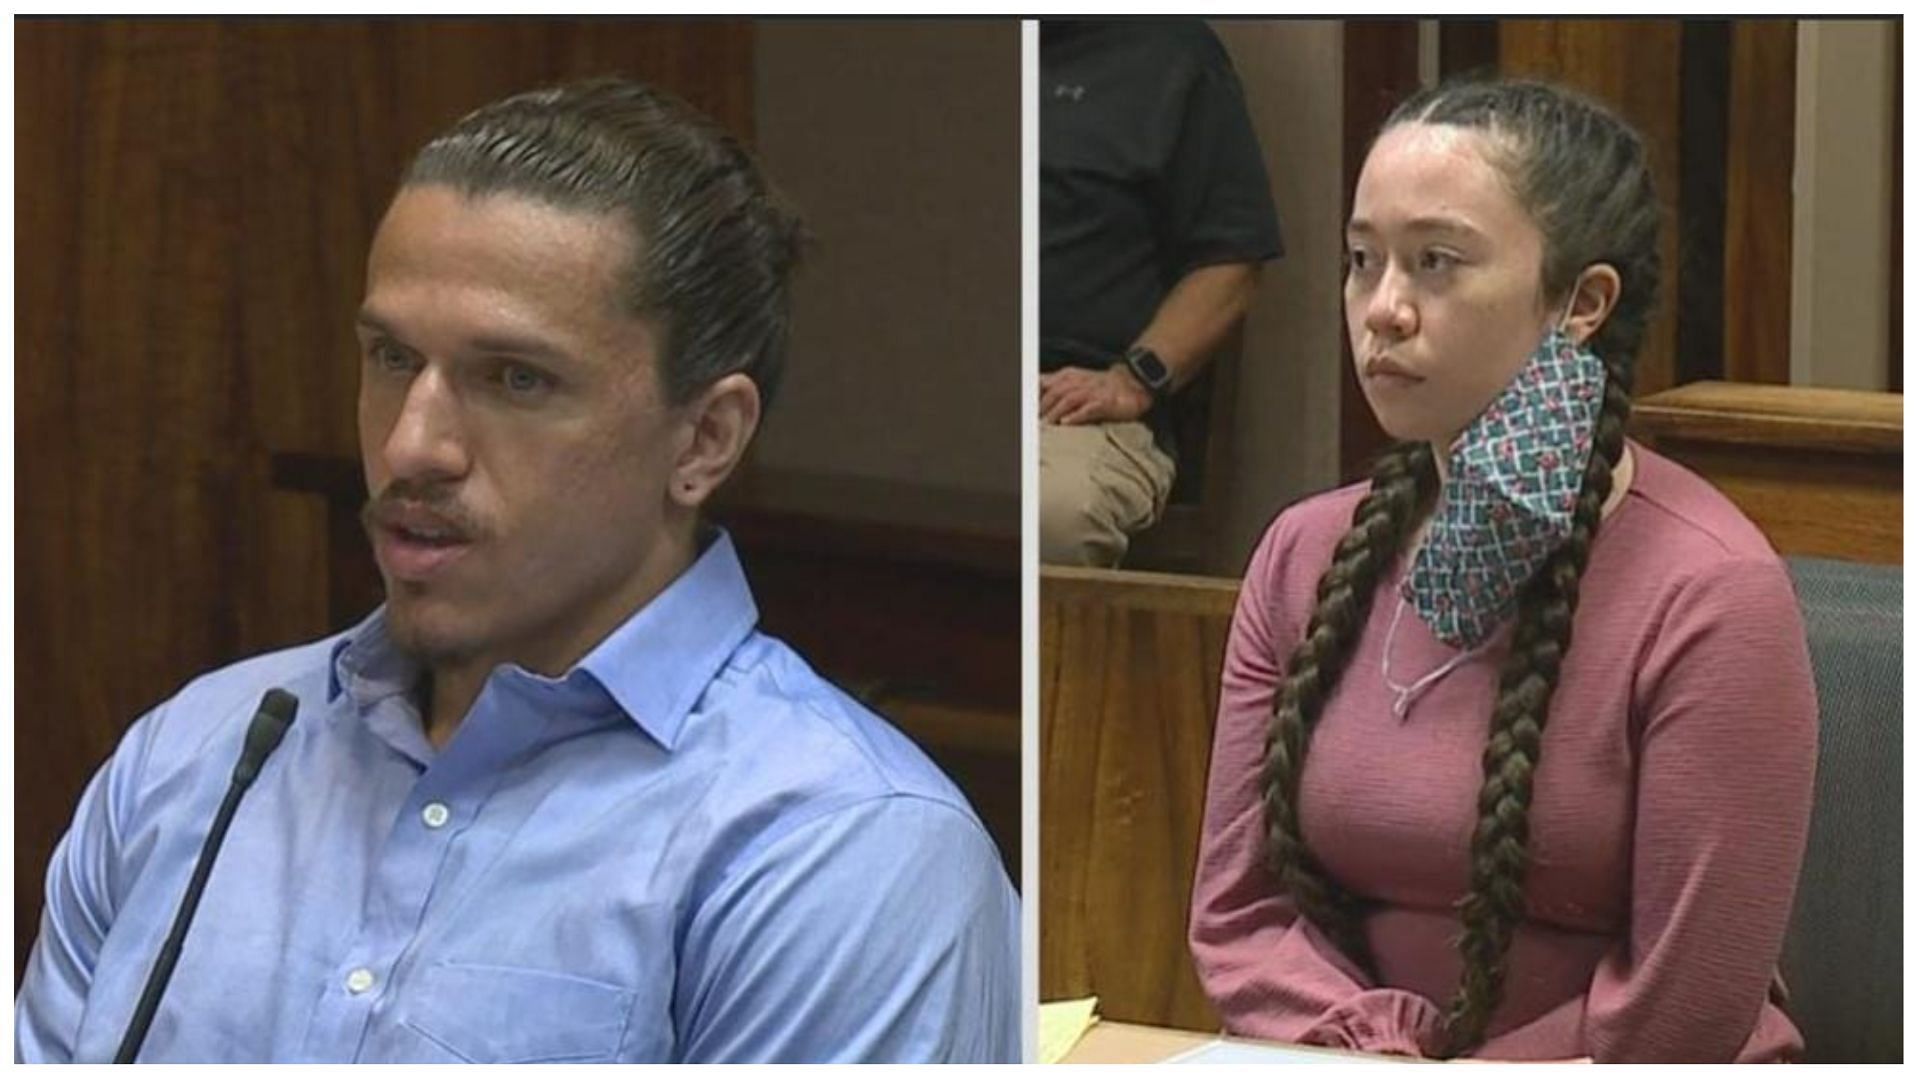 Stephen Brown and Hailey Dandurand stand trial for 2017 Telma Boinville murder 